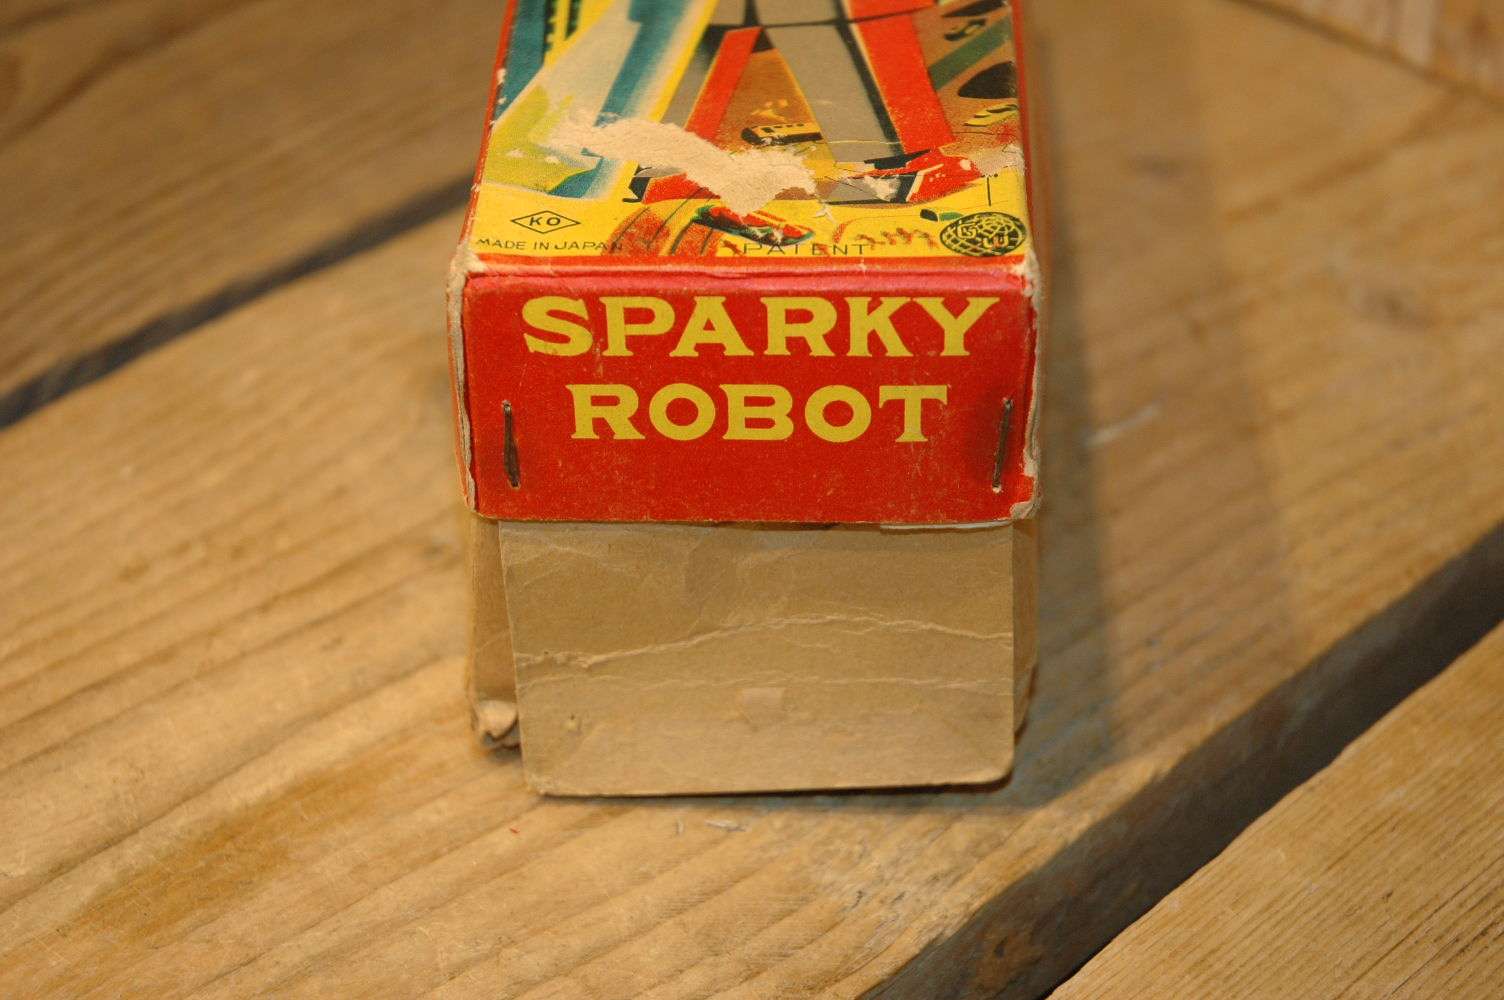 Yoshiya - Sparky Robot